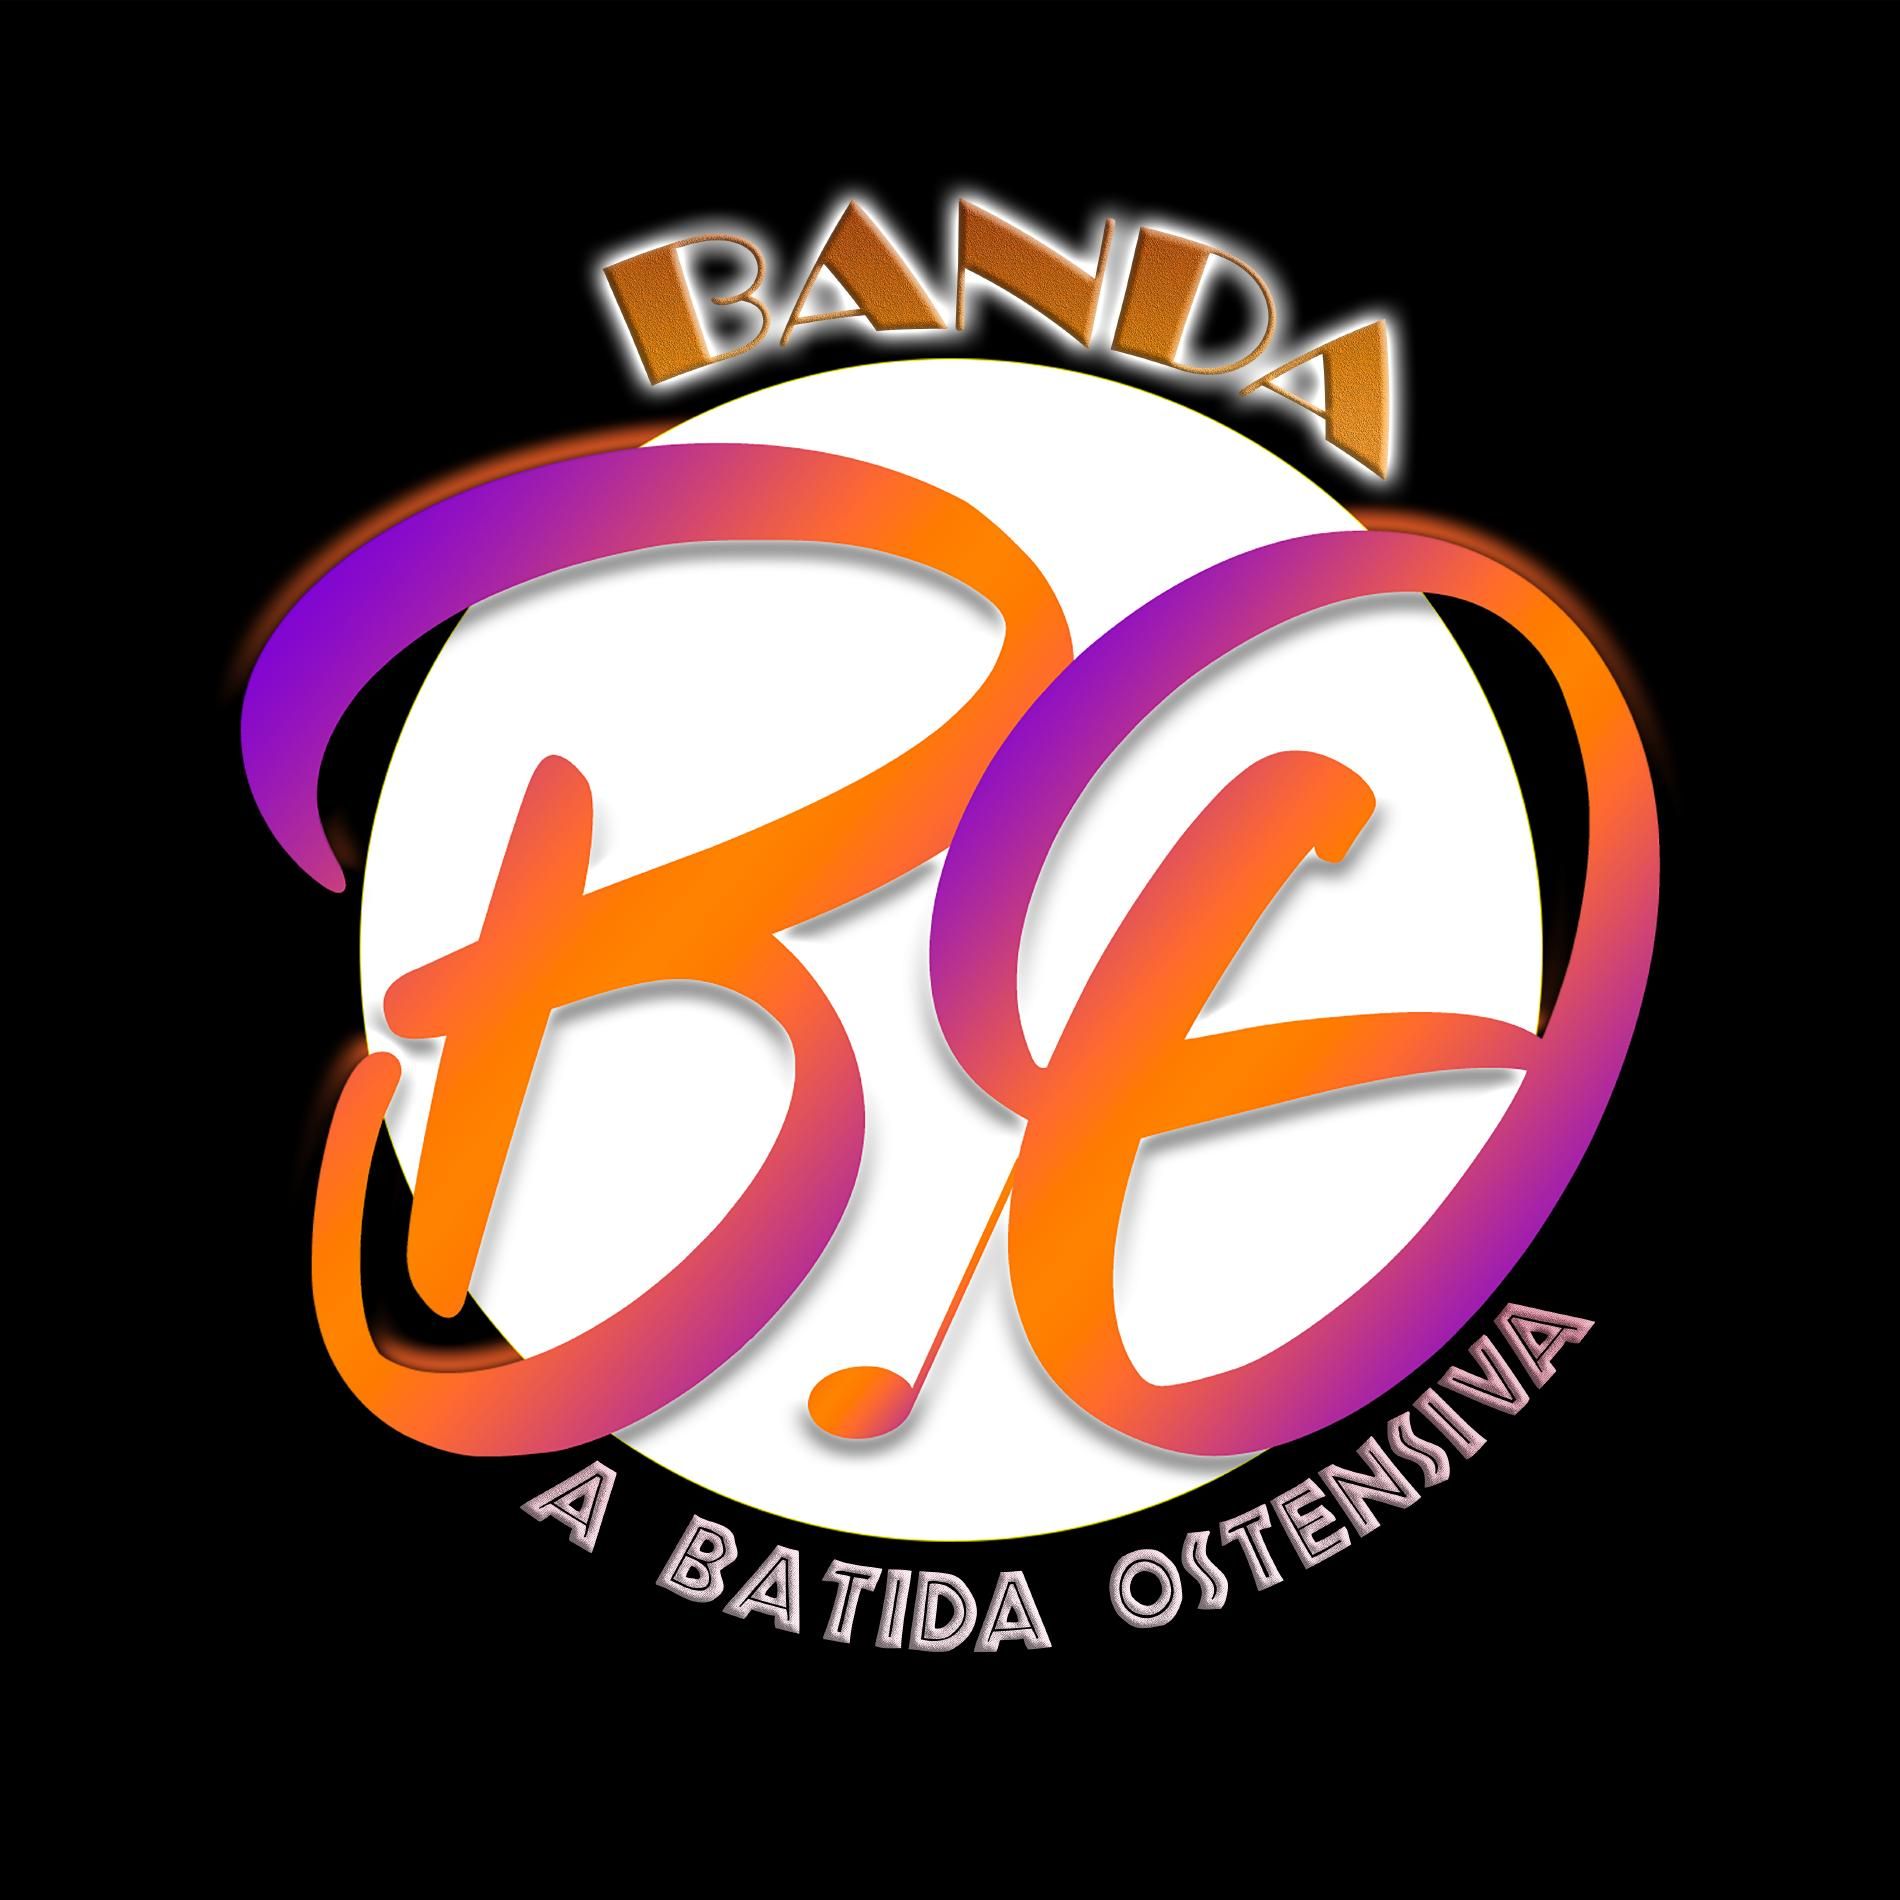 Batatinha Frita 1 2 3 - song and lyrics by Dj Cabide